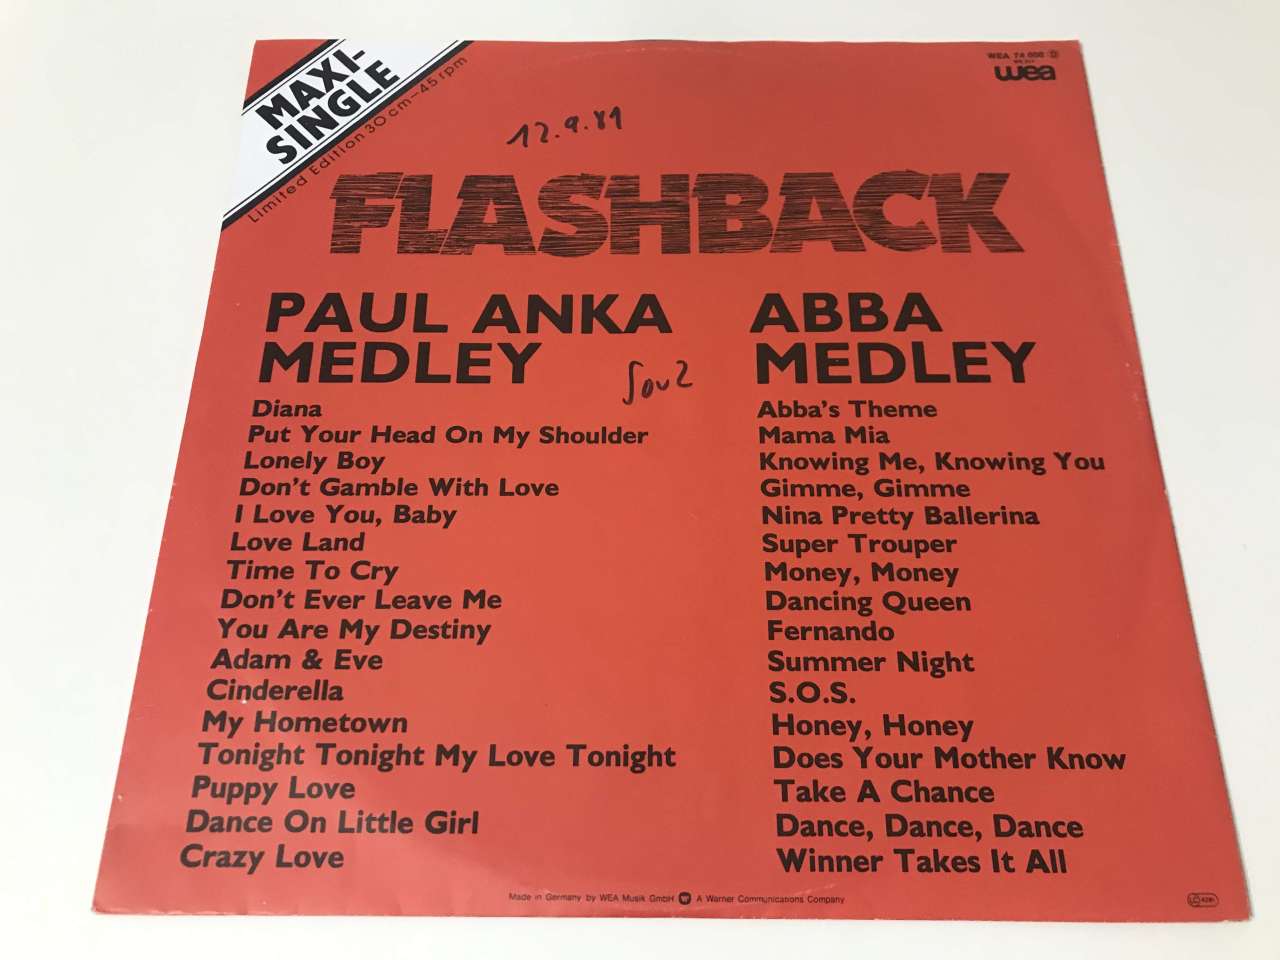 Flashback – Paul Anka Medley / Abba Medley